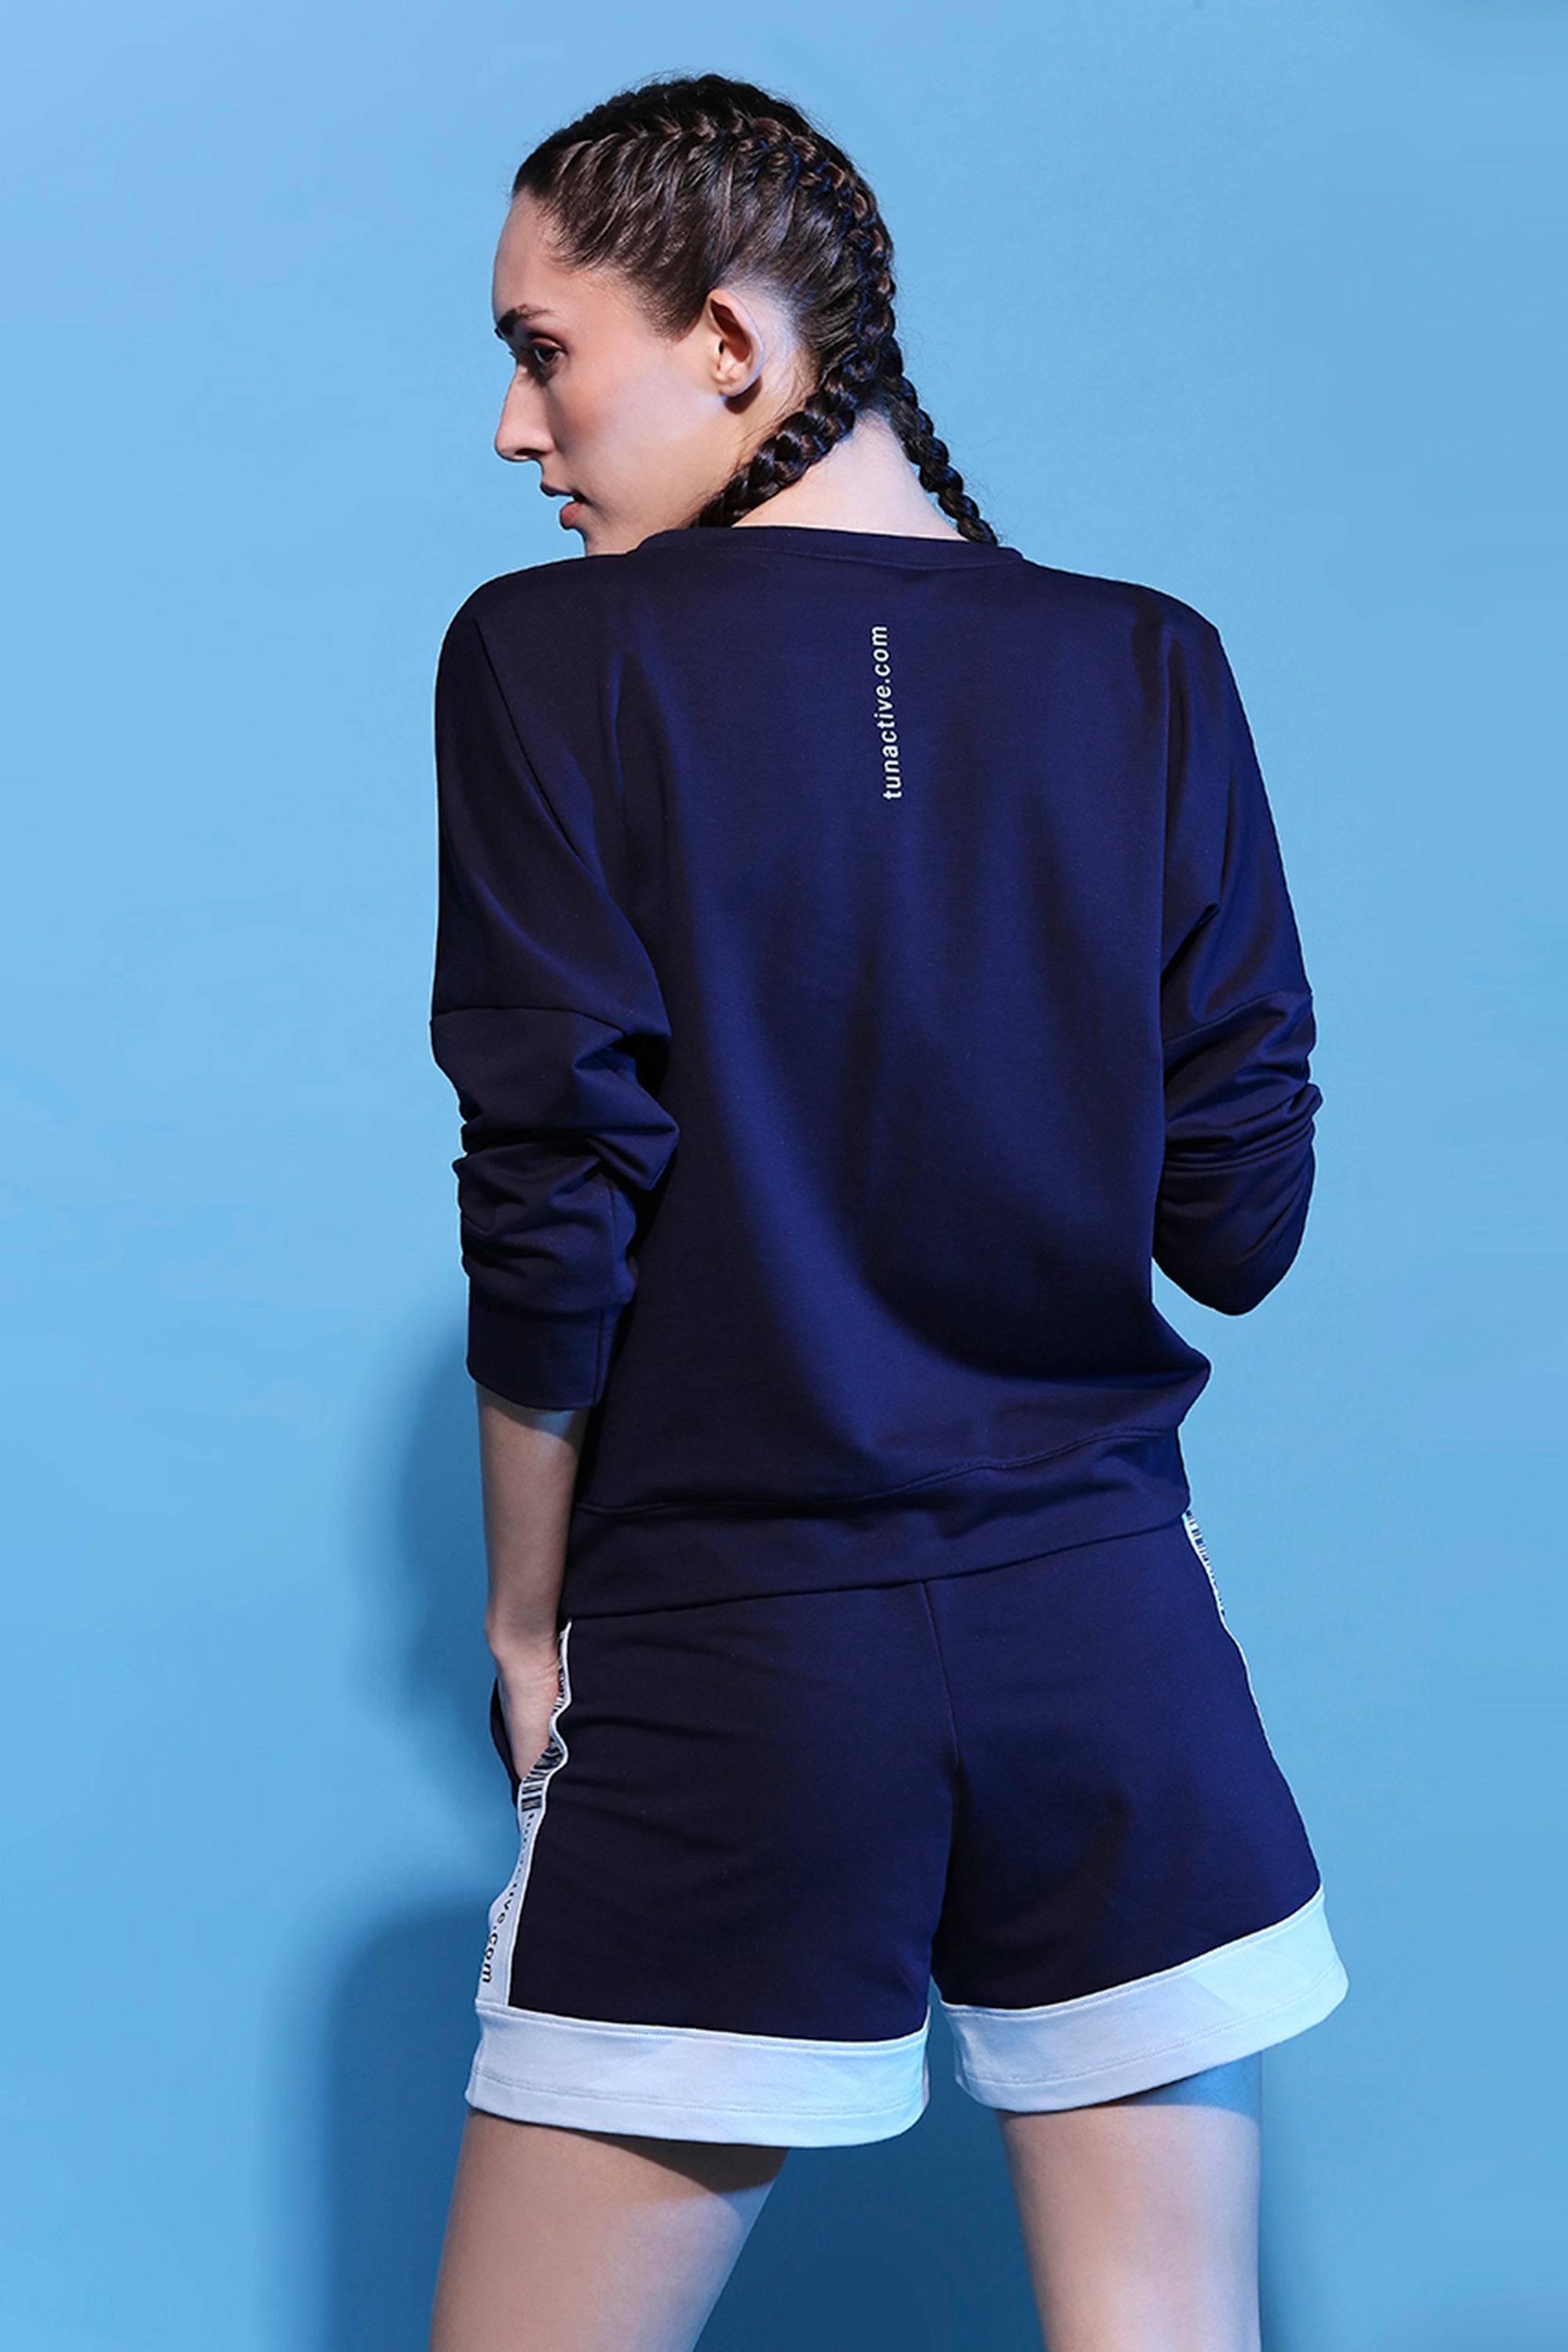 Barcode Printed Navy Blue Sweatshirt